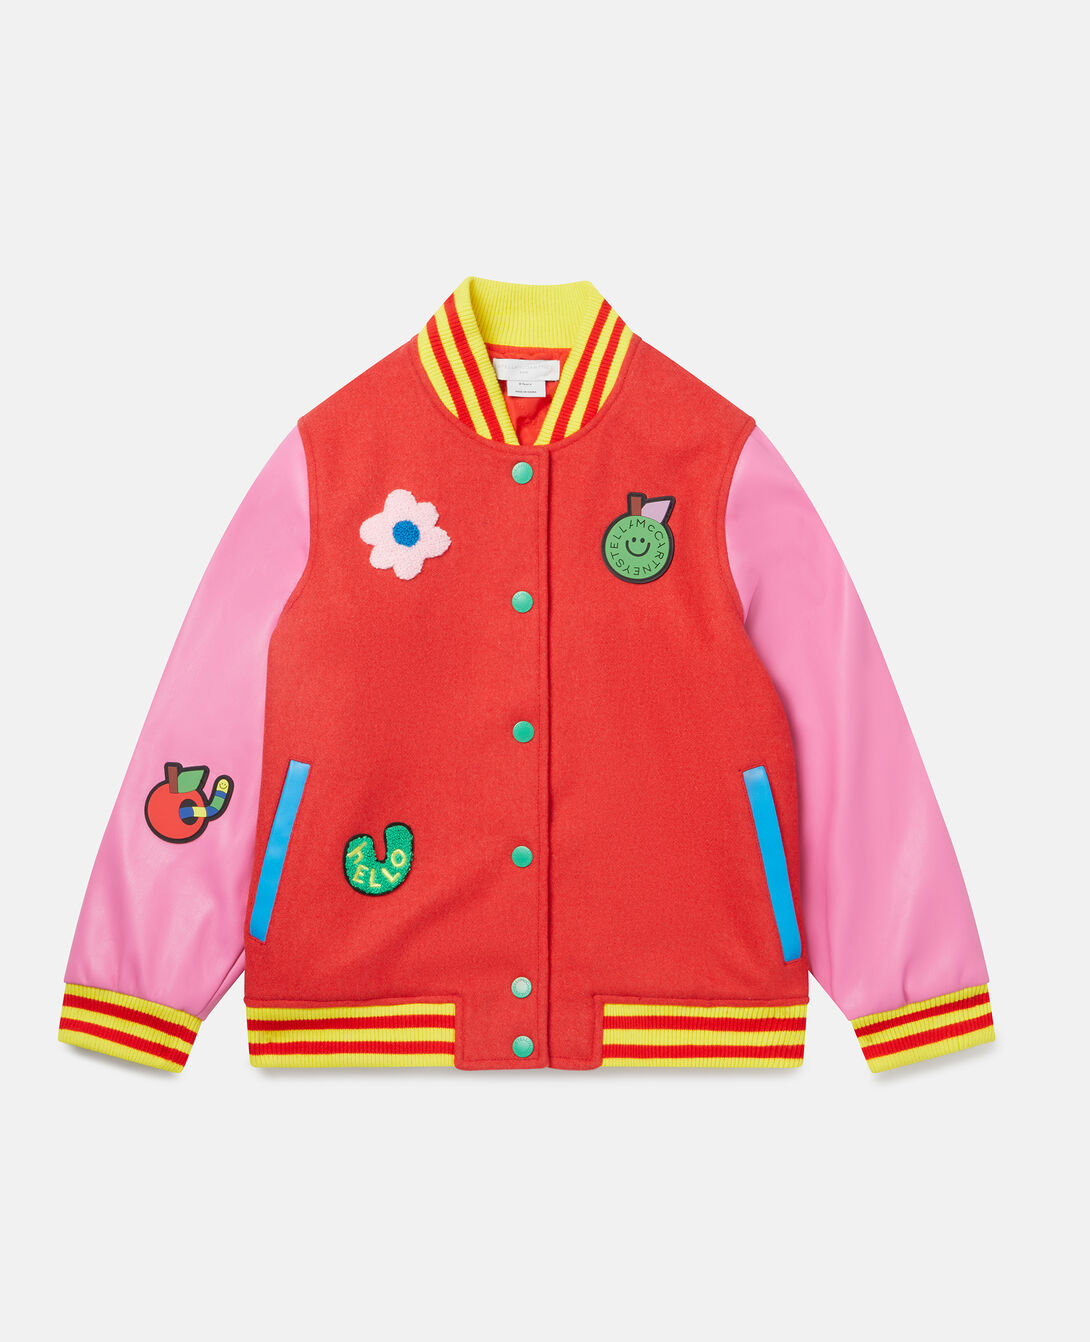 Personalised Embroidered Varsity Jacket